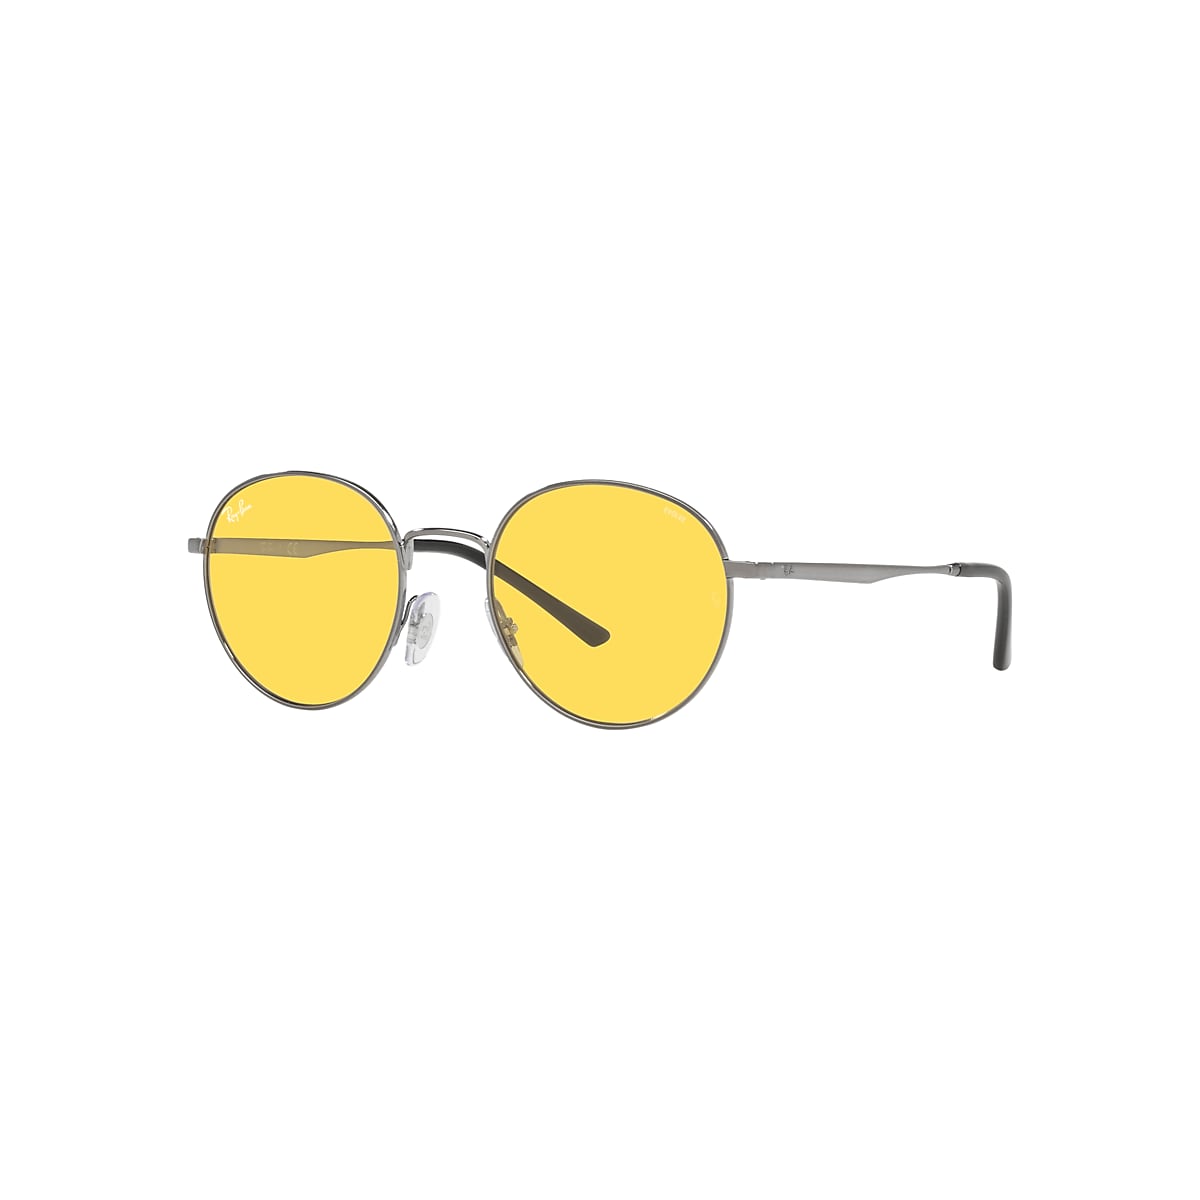 Rb3681 Evolve Sunglasses in Gunmetal and Yellow Photochromic 